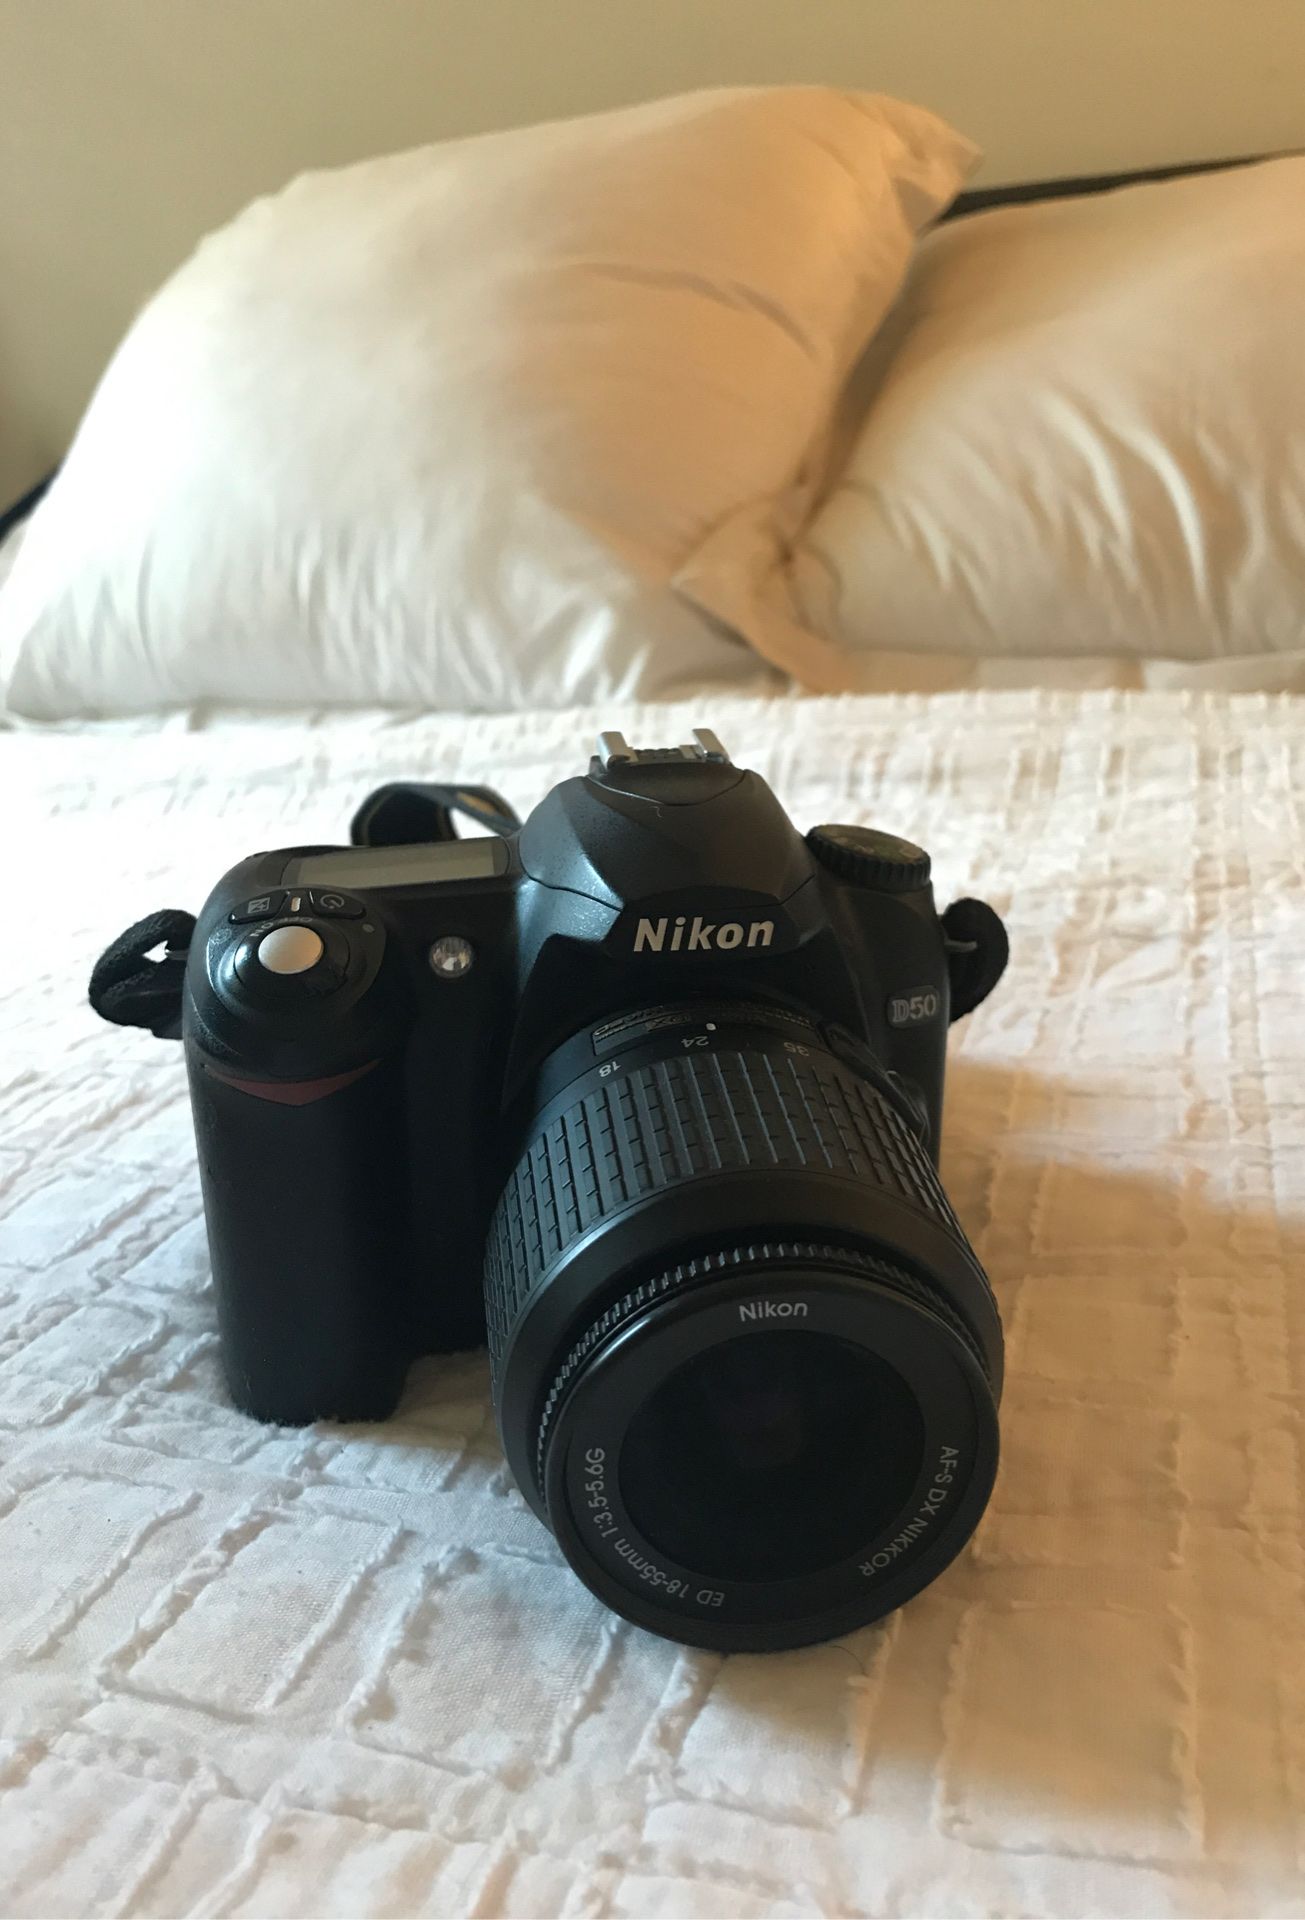 Nikon D50 digital camera